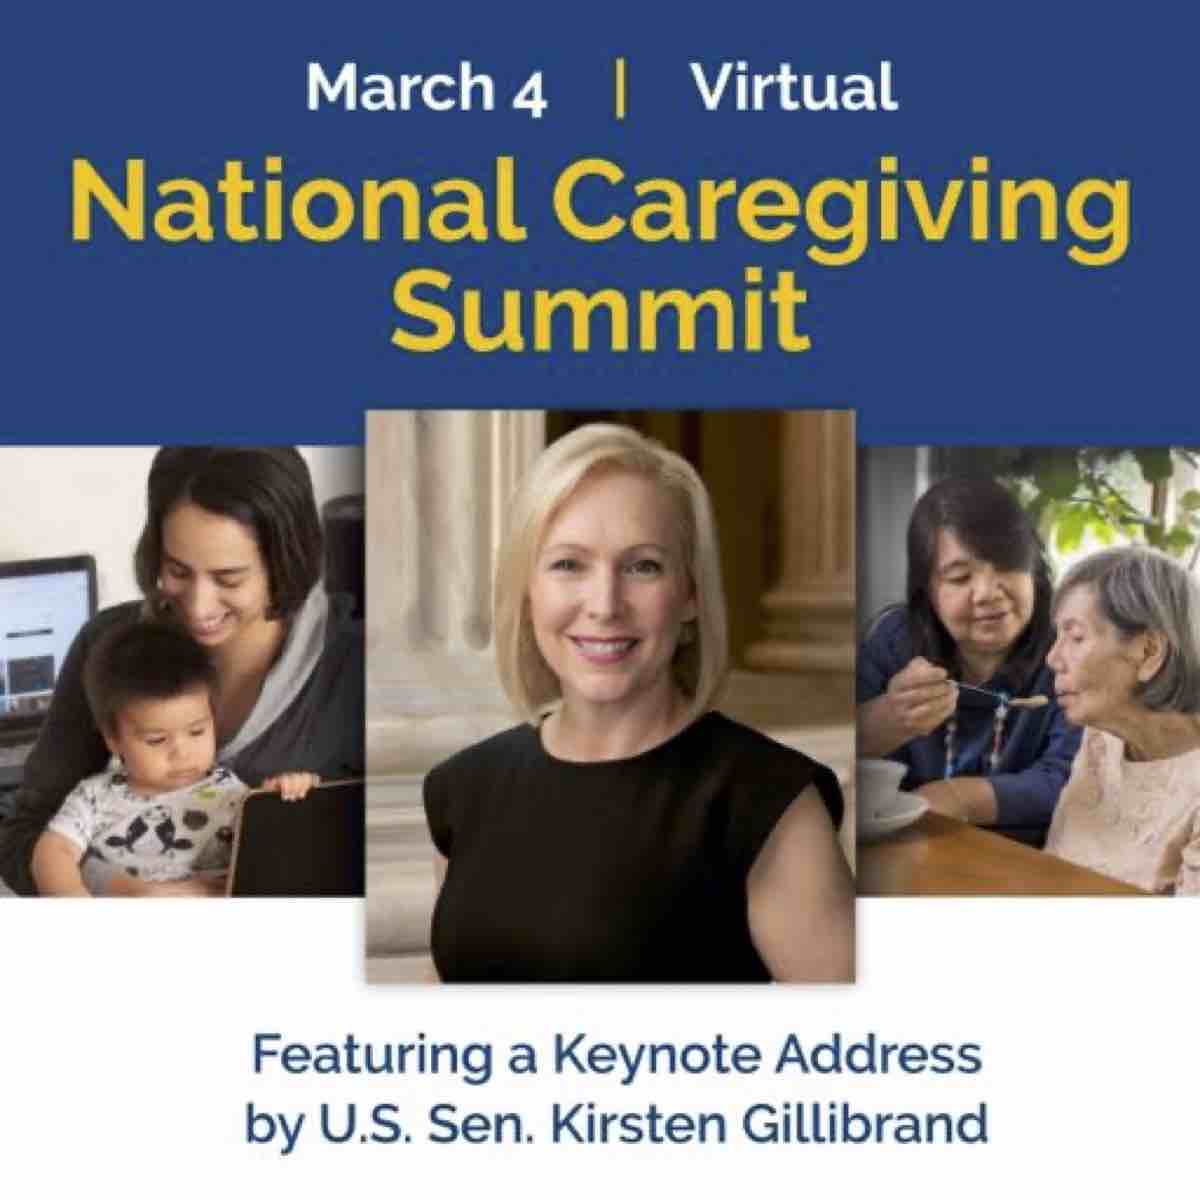 National Caregiving Summit Image